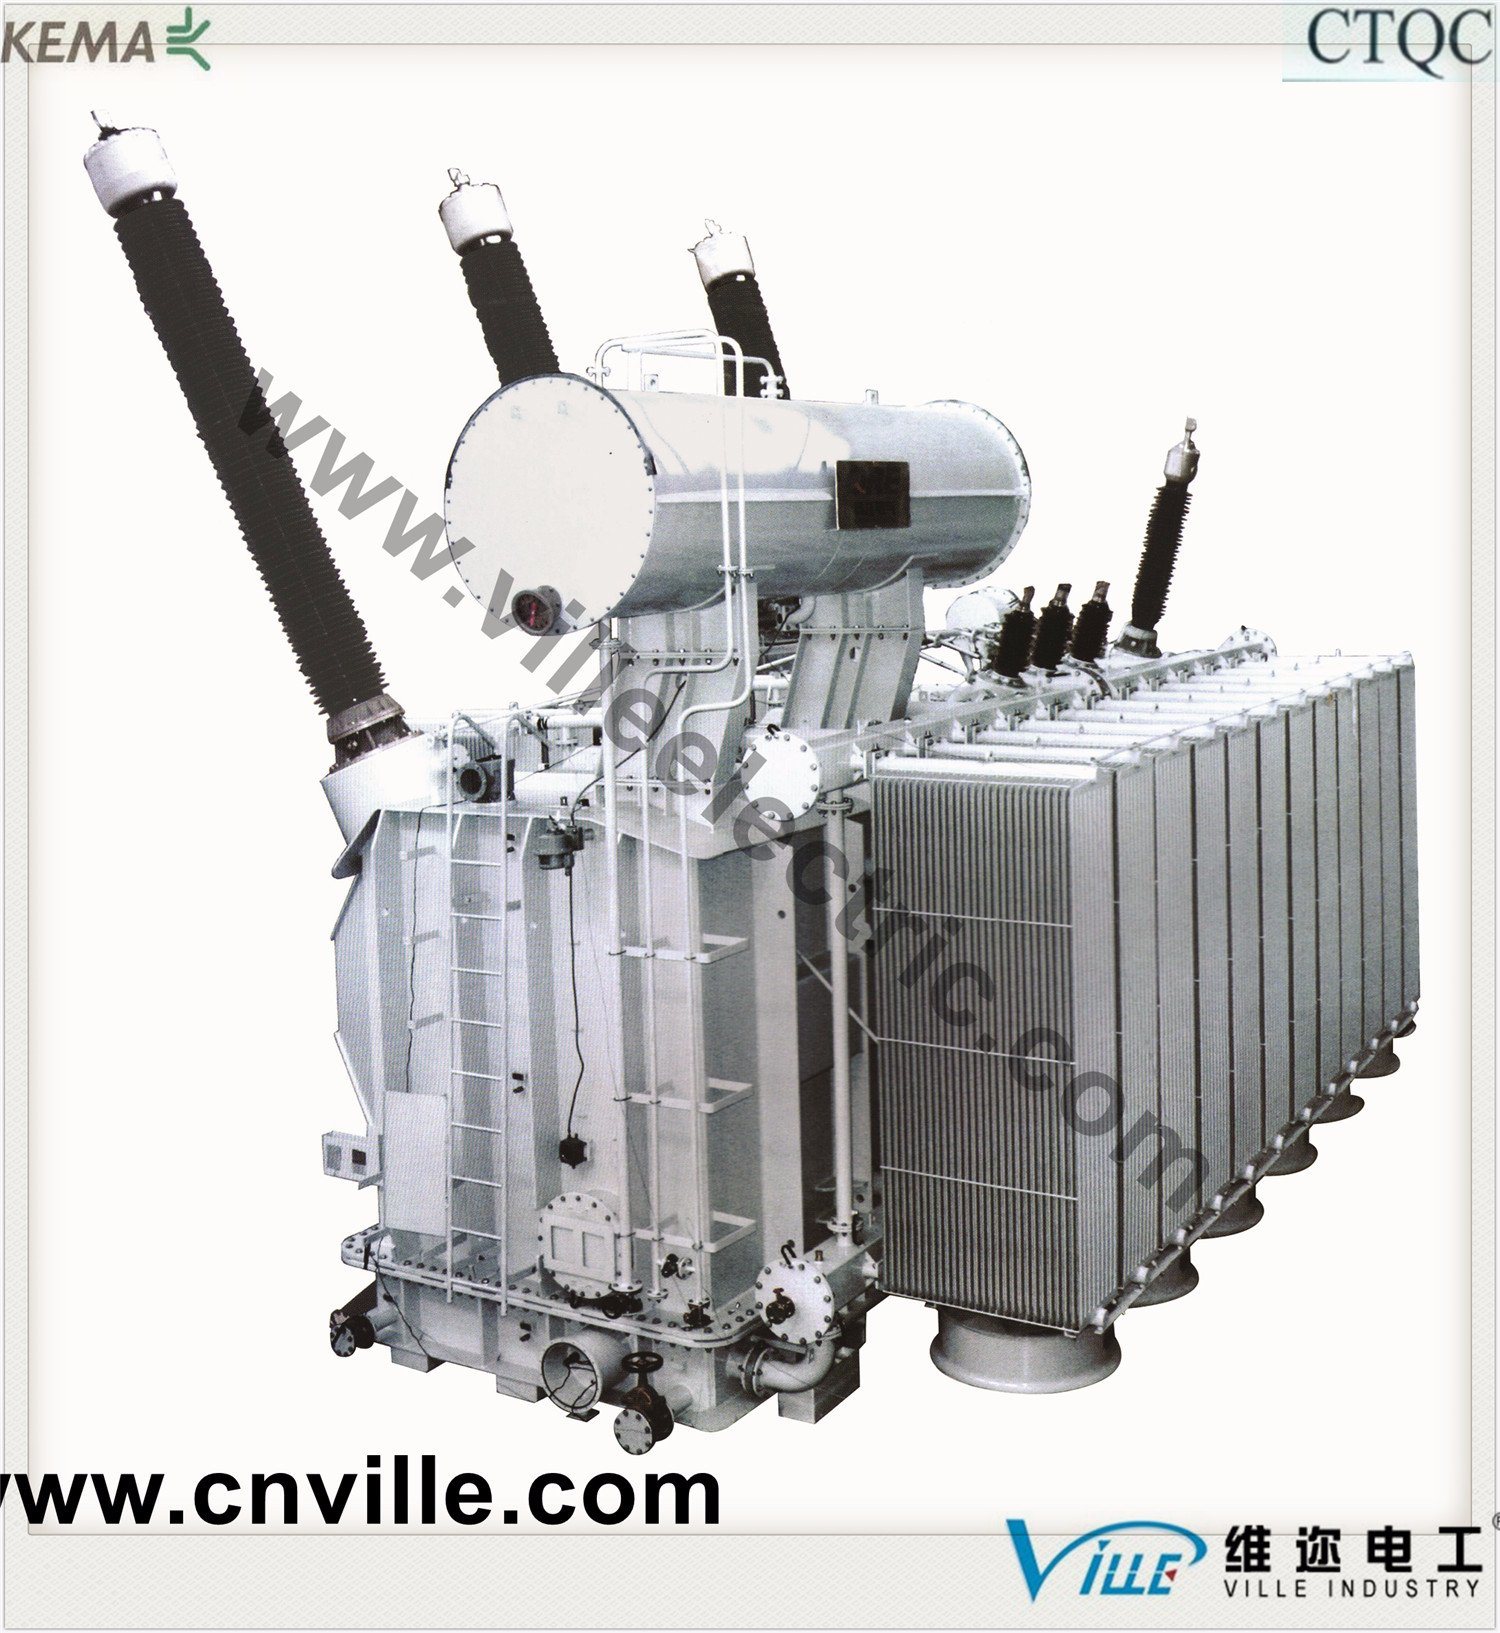 Transformers 220kv Power Transmission Power Transformer Custom Made Free Design